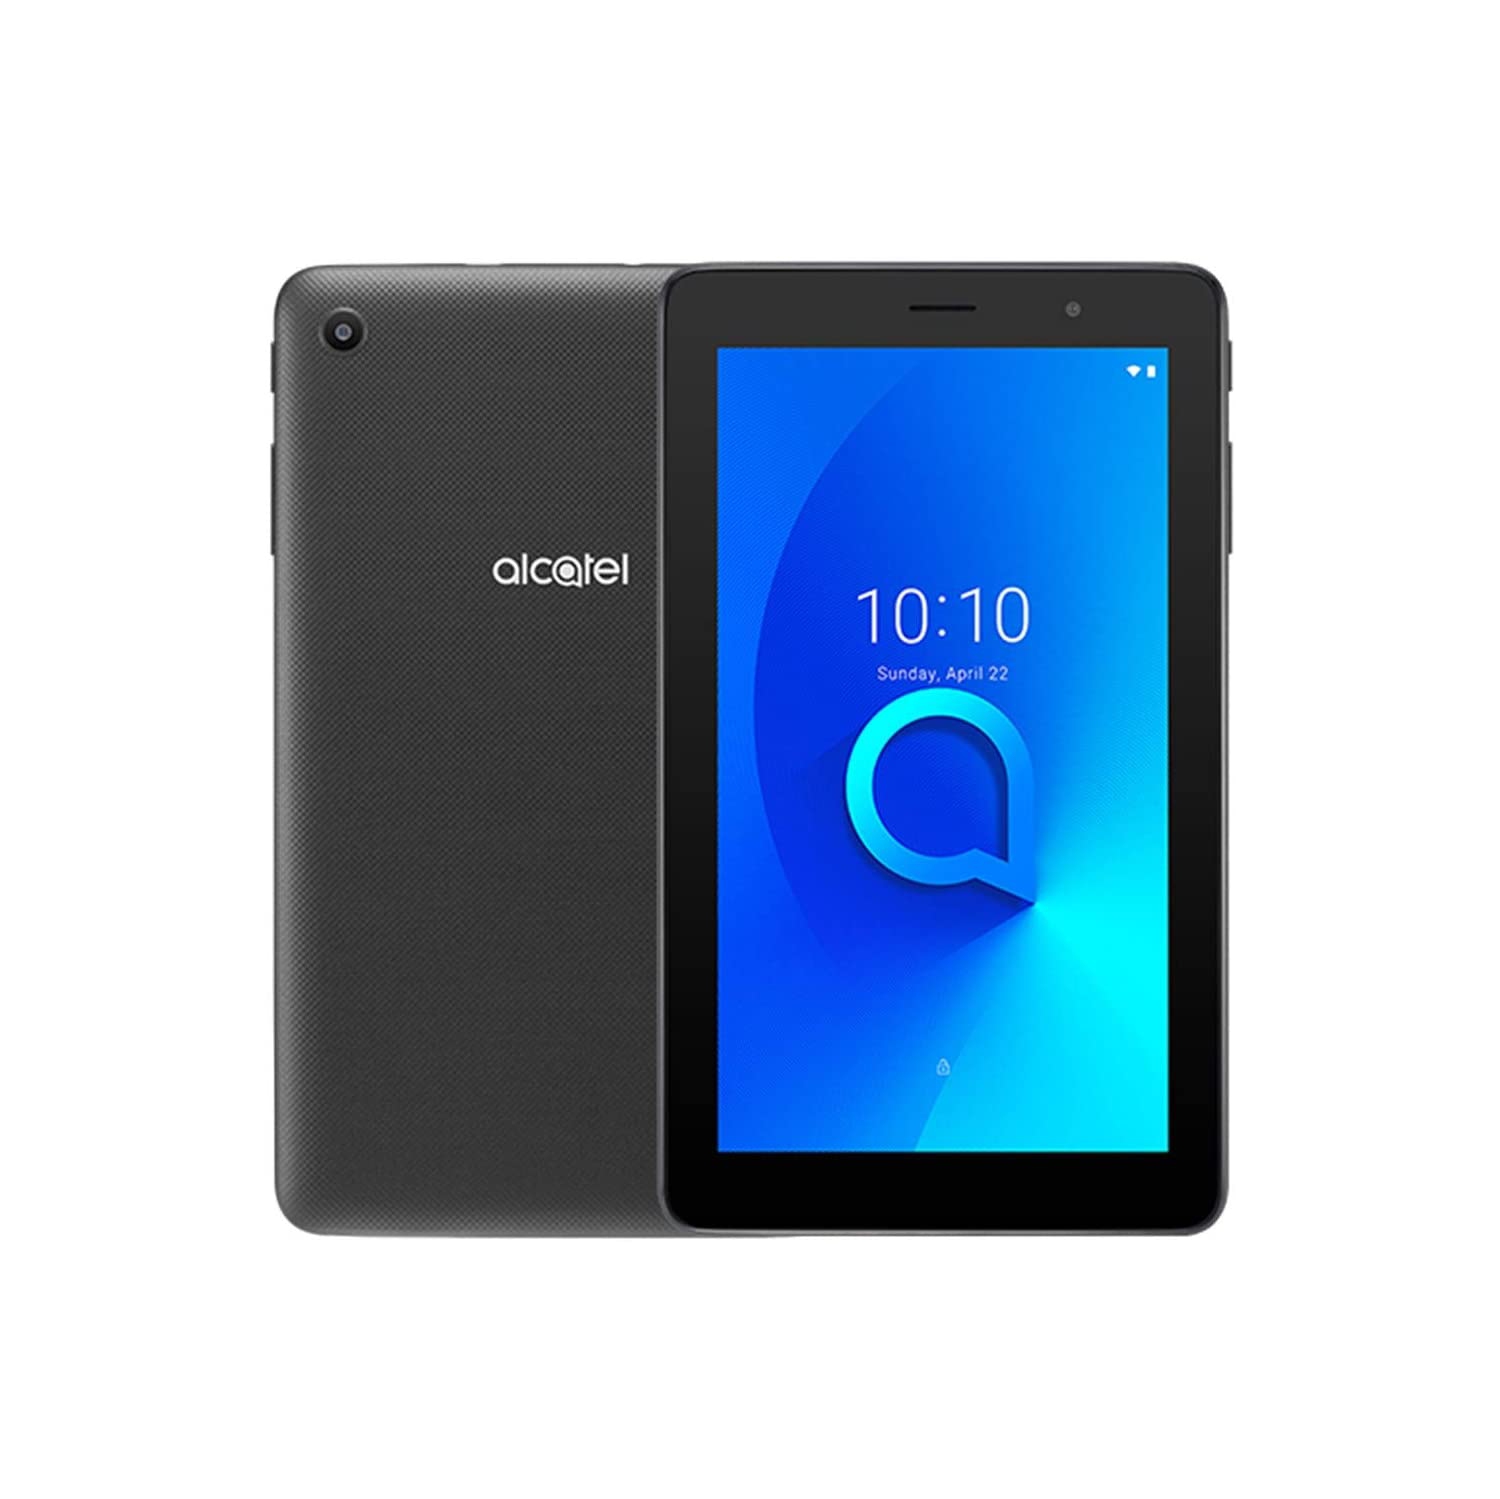 Alcatel 1T7 9013A (16GB) 7.0" Android 10 Tablet (WiFi + Cellular) - Unlocked - Prime Black - International Model - Open Box